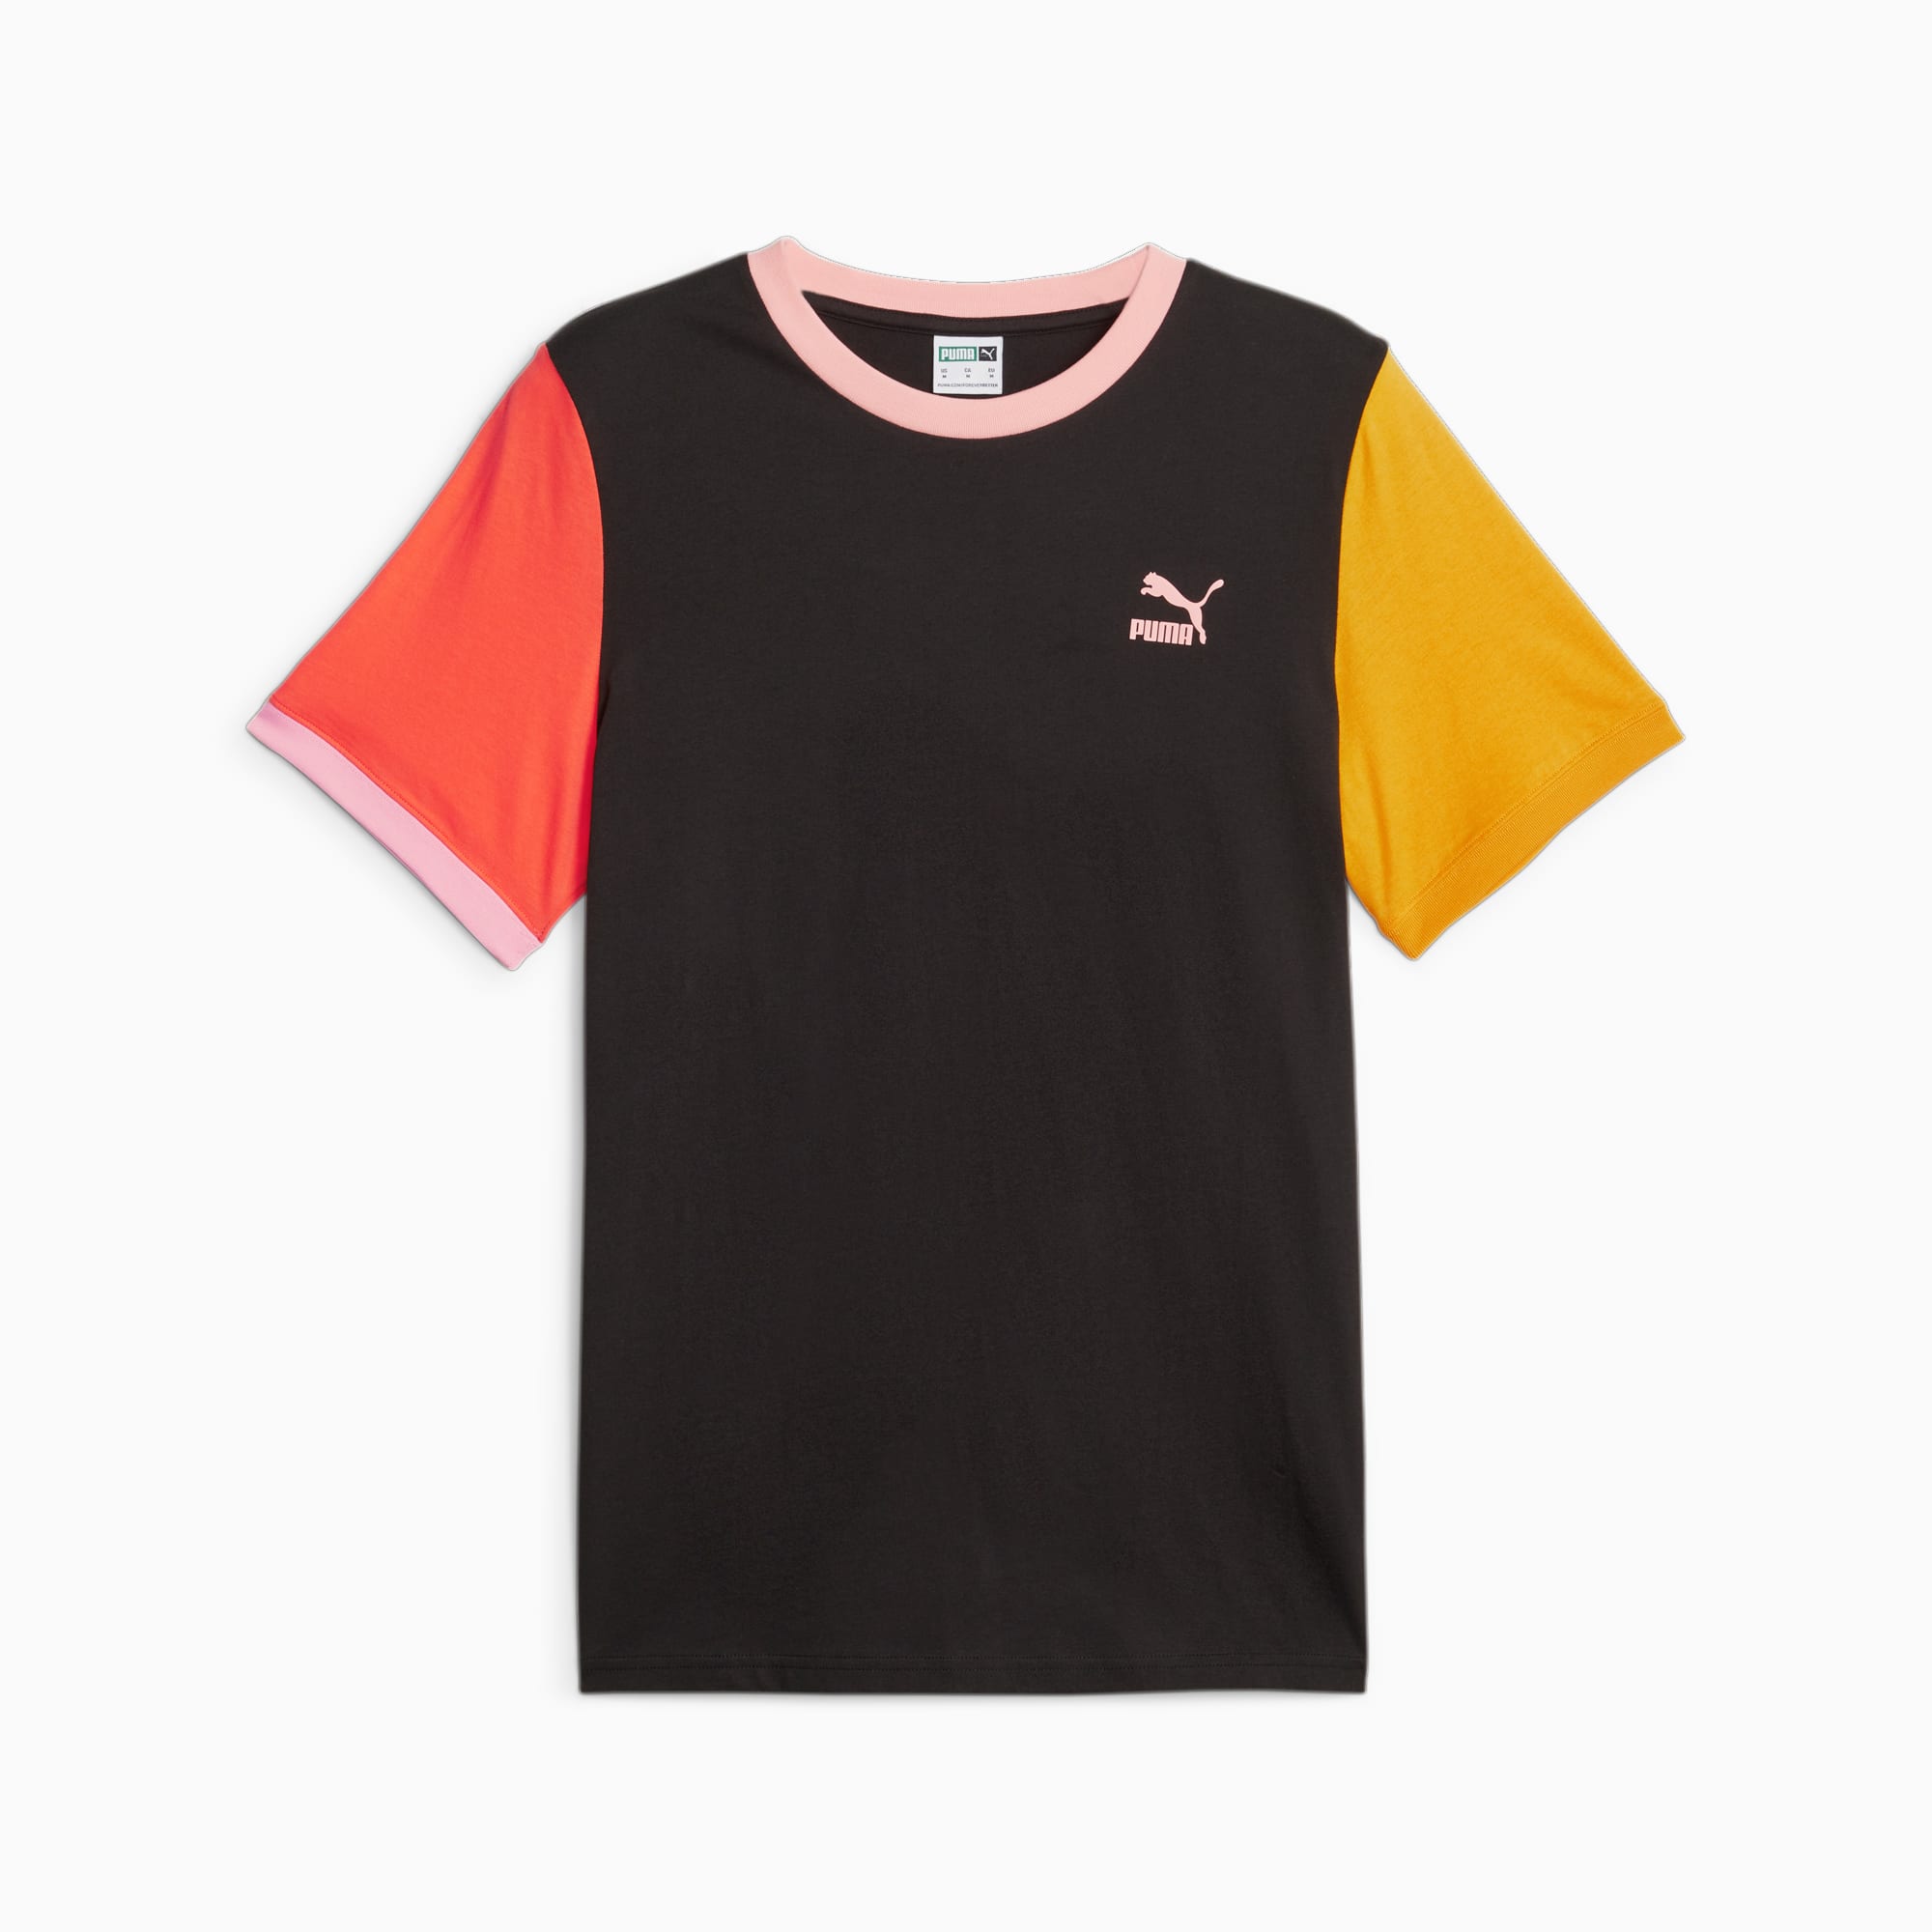 PUMA Classics Block T-Shirt Men, Black/Hot Heat, Size XS, Clothing